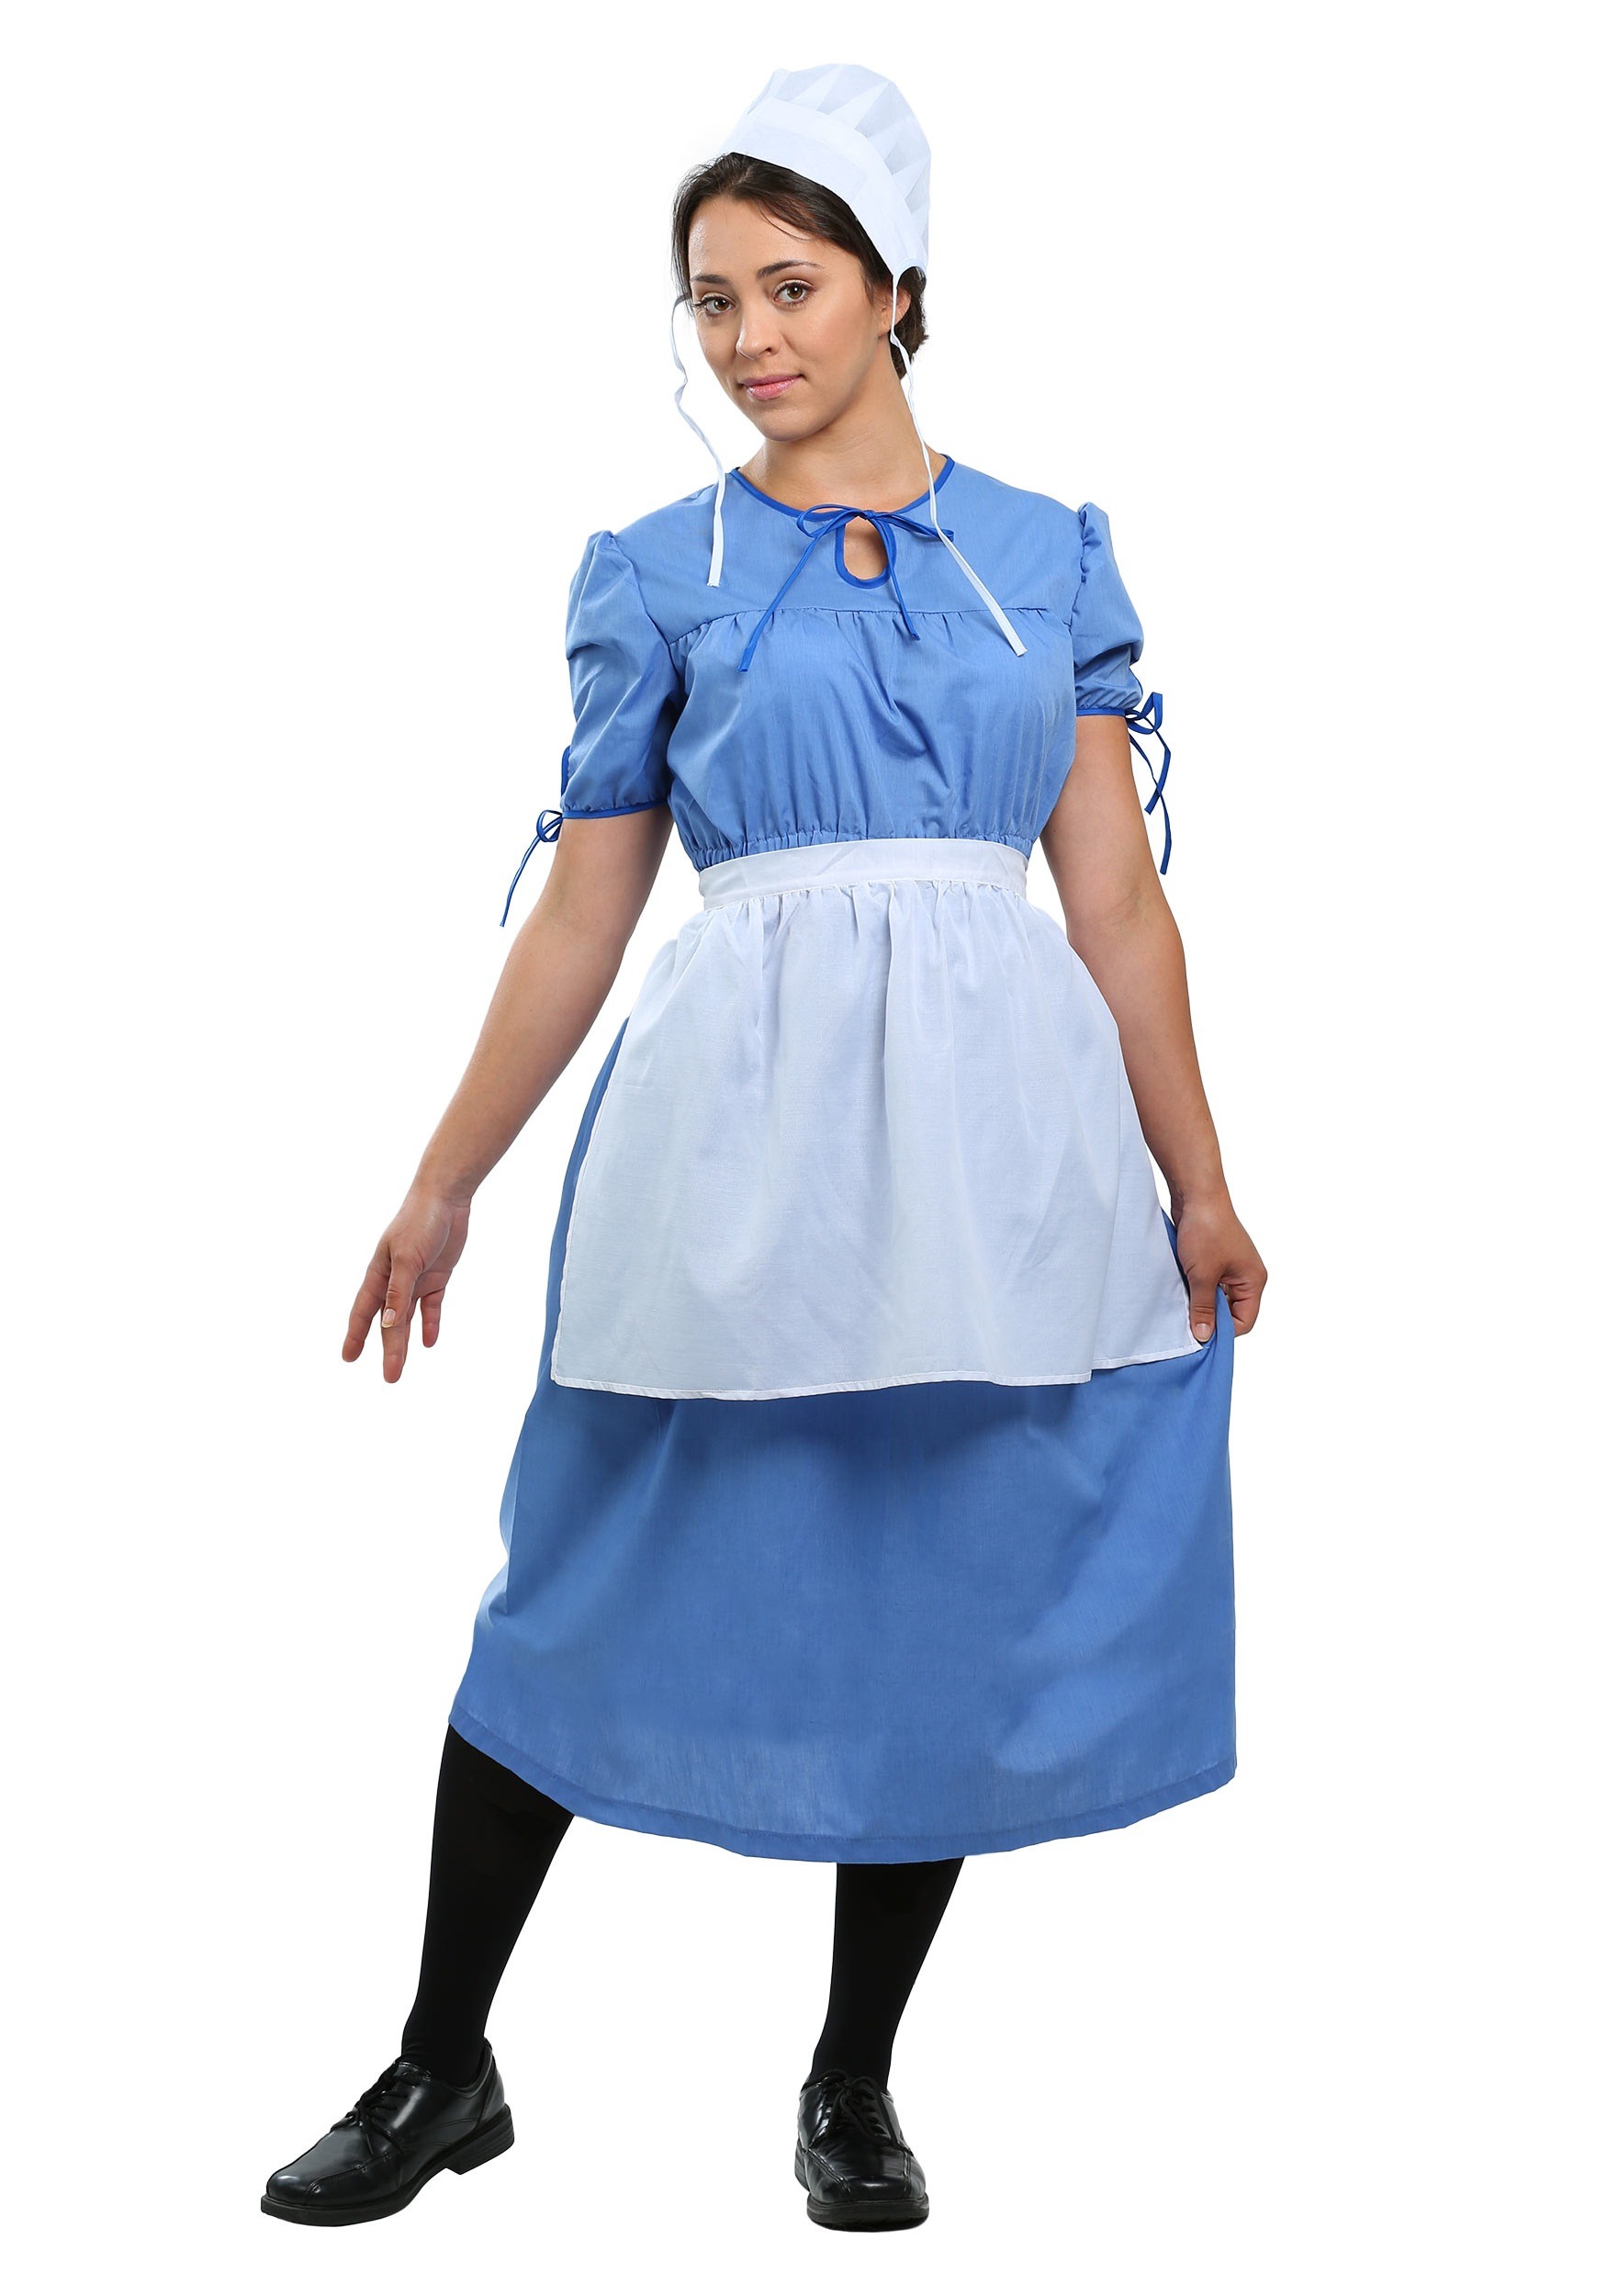 Amish Prairie Woman Costume Dress